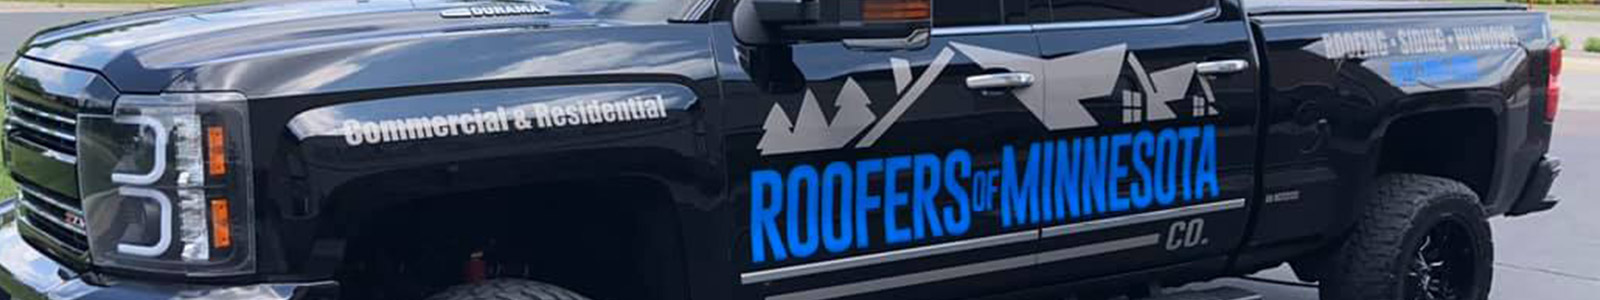 Roofers of Minnesota Truck